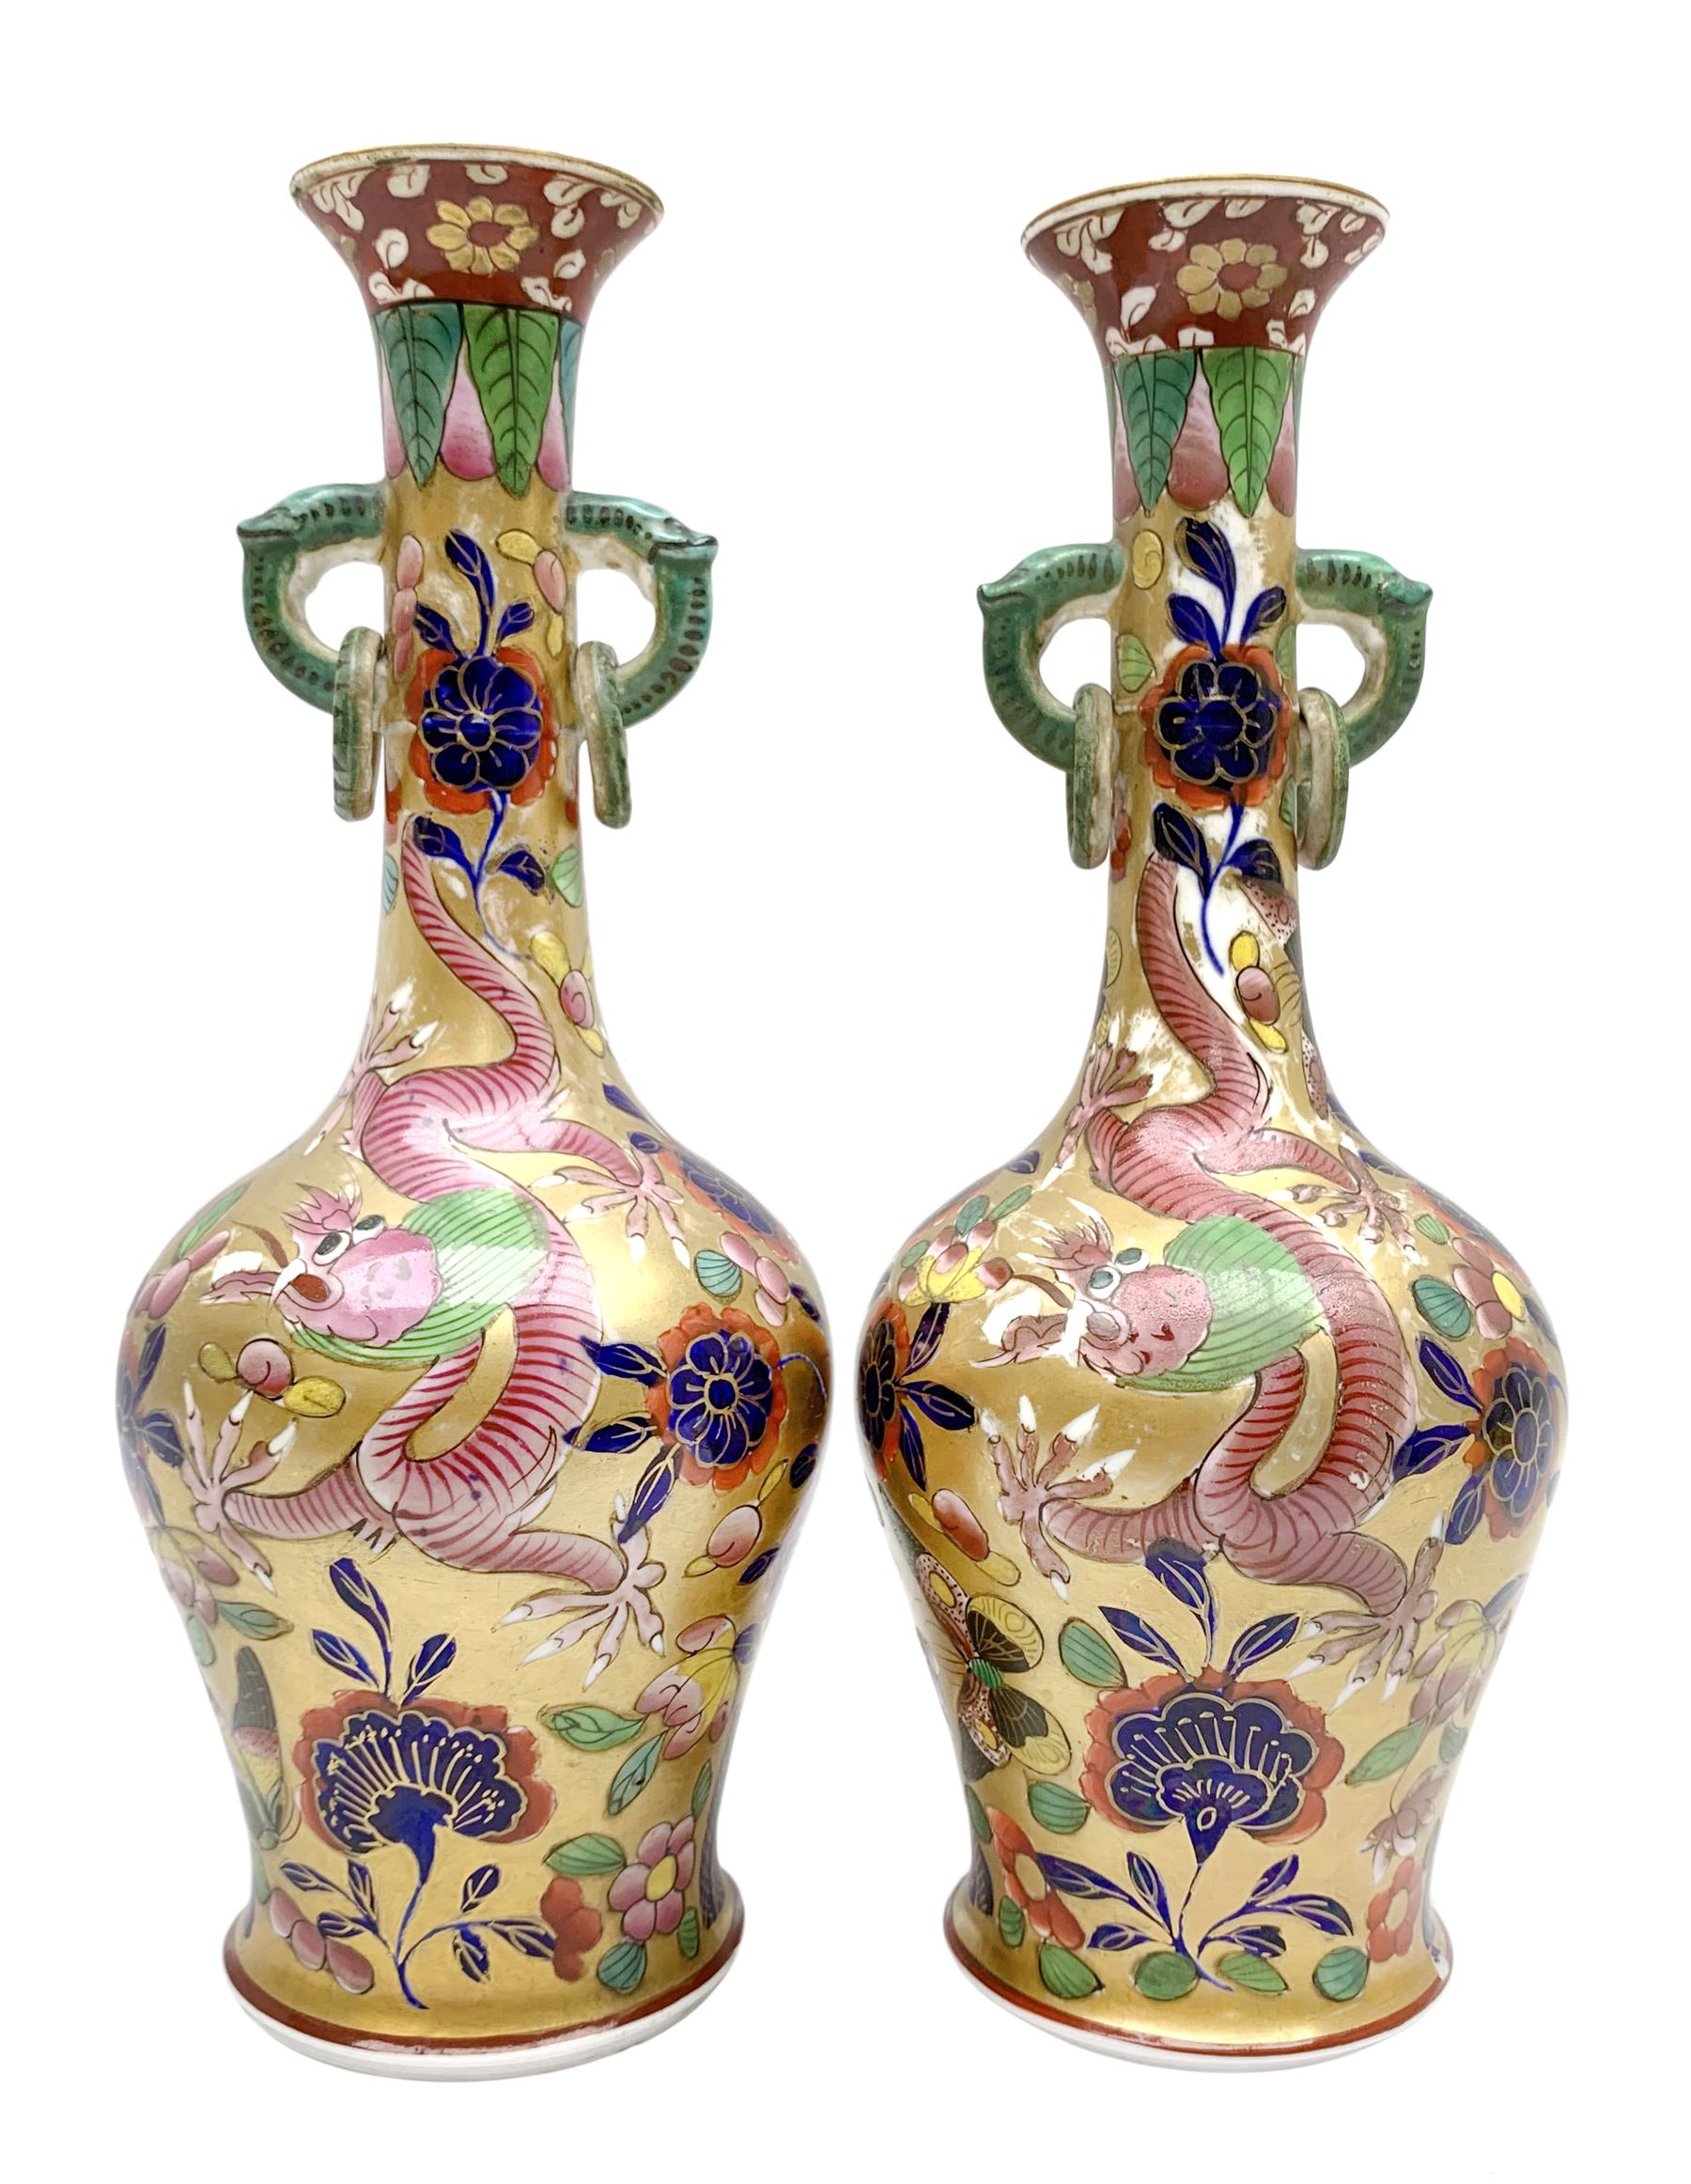 Pair of early 19th century Miles Mason vases